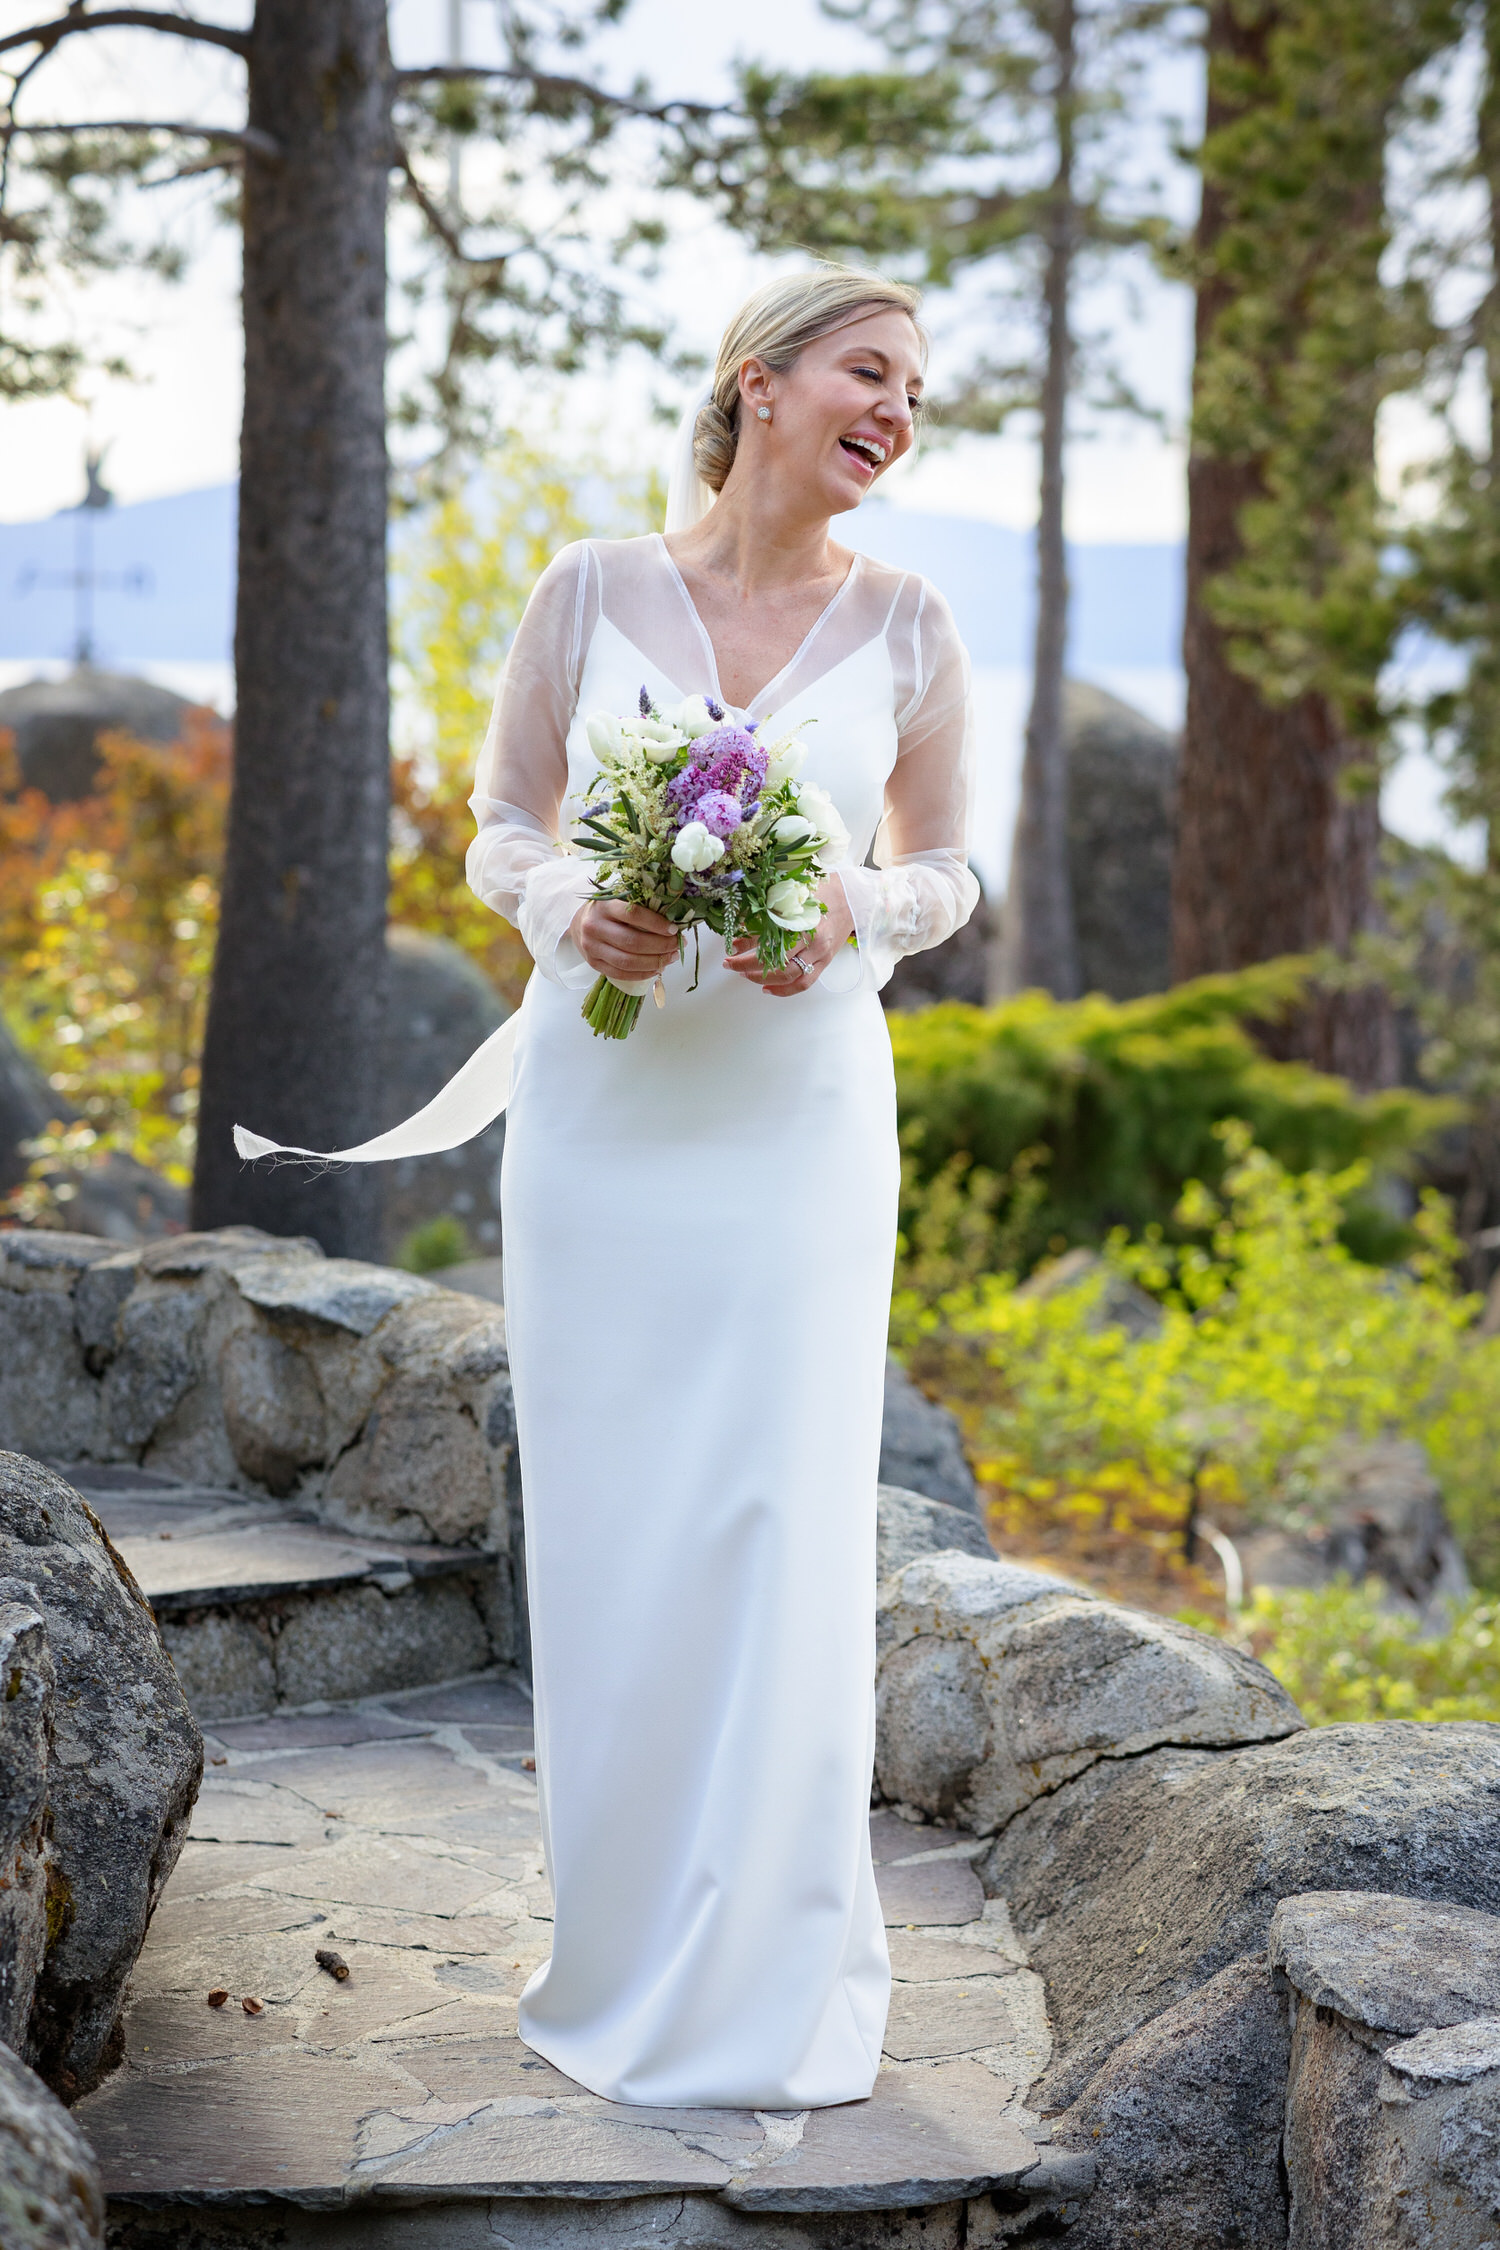 A joyful, candid portrait of the bride at a Thunderbird Lodge wedding.